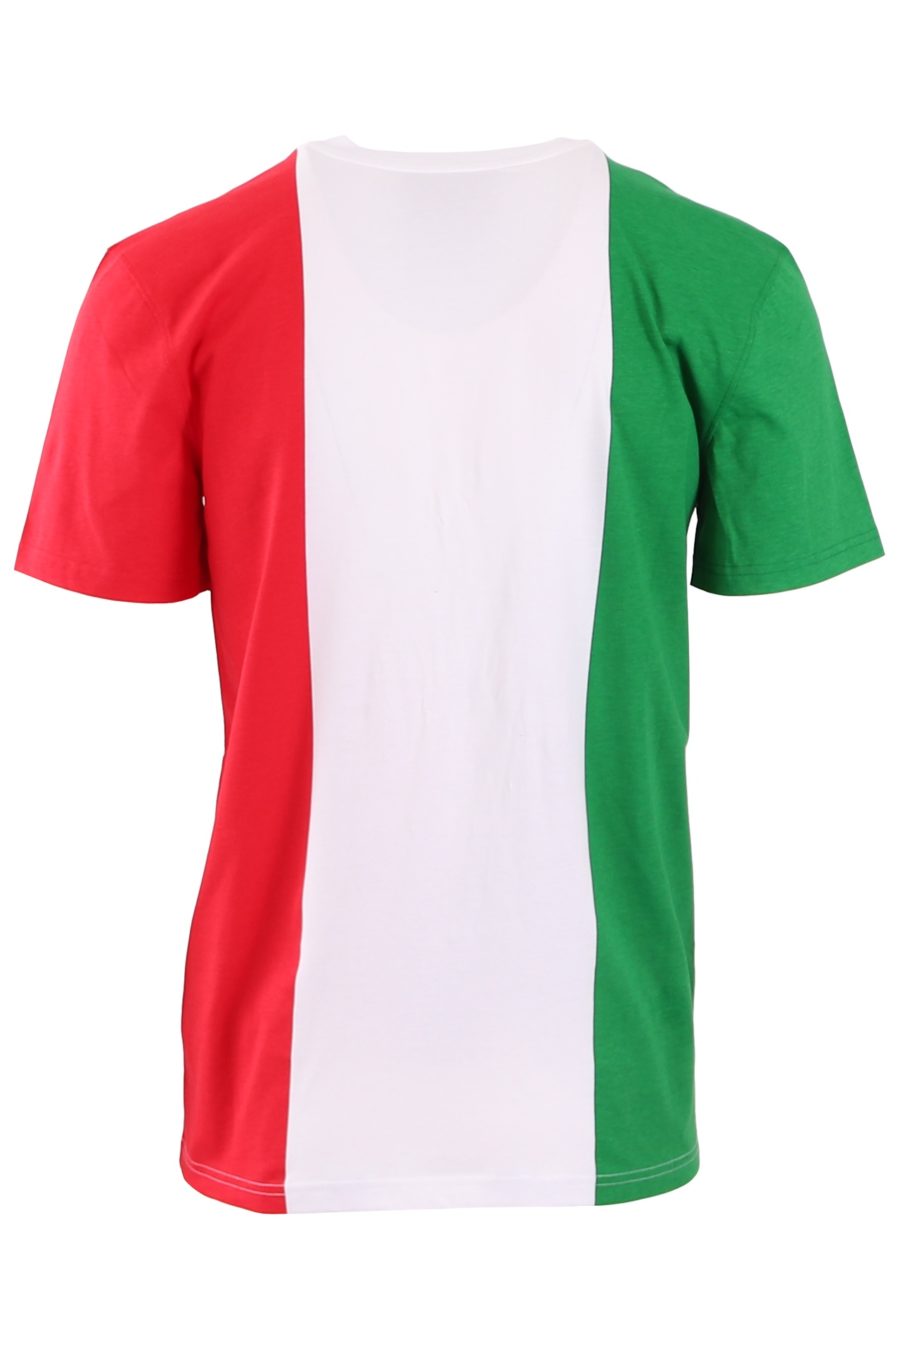 T-Shirt Moschino Couture Farben von Italien - 28bf4902a8e636c090fd48e2a05625ea90cbb34b